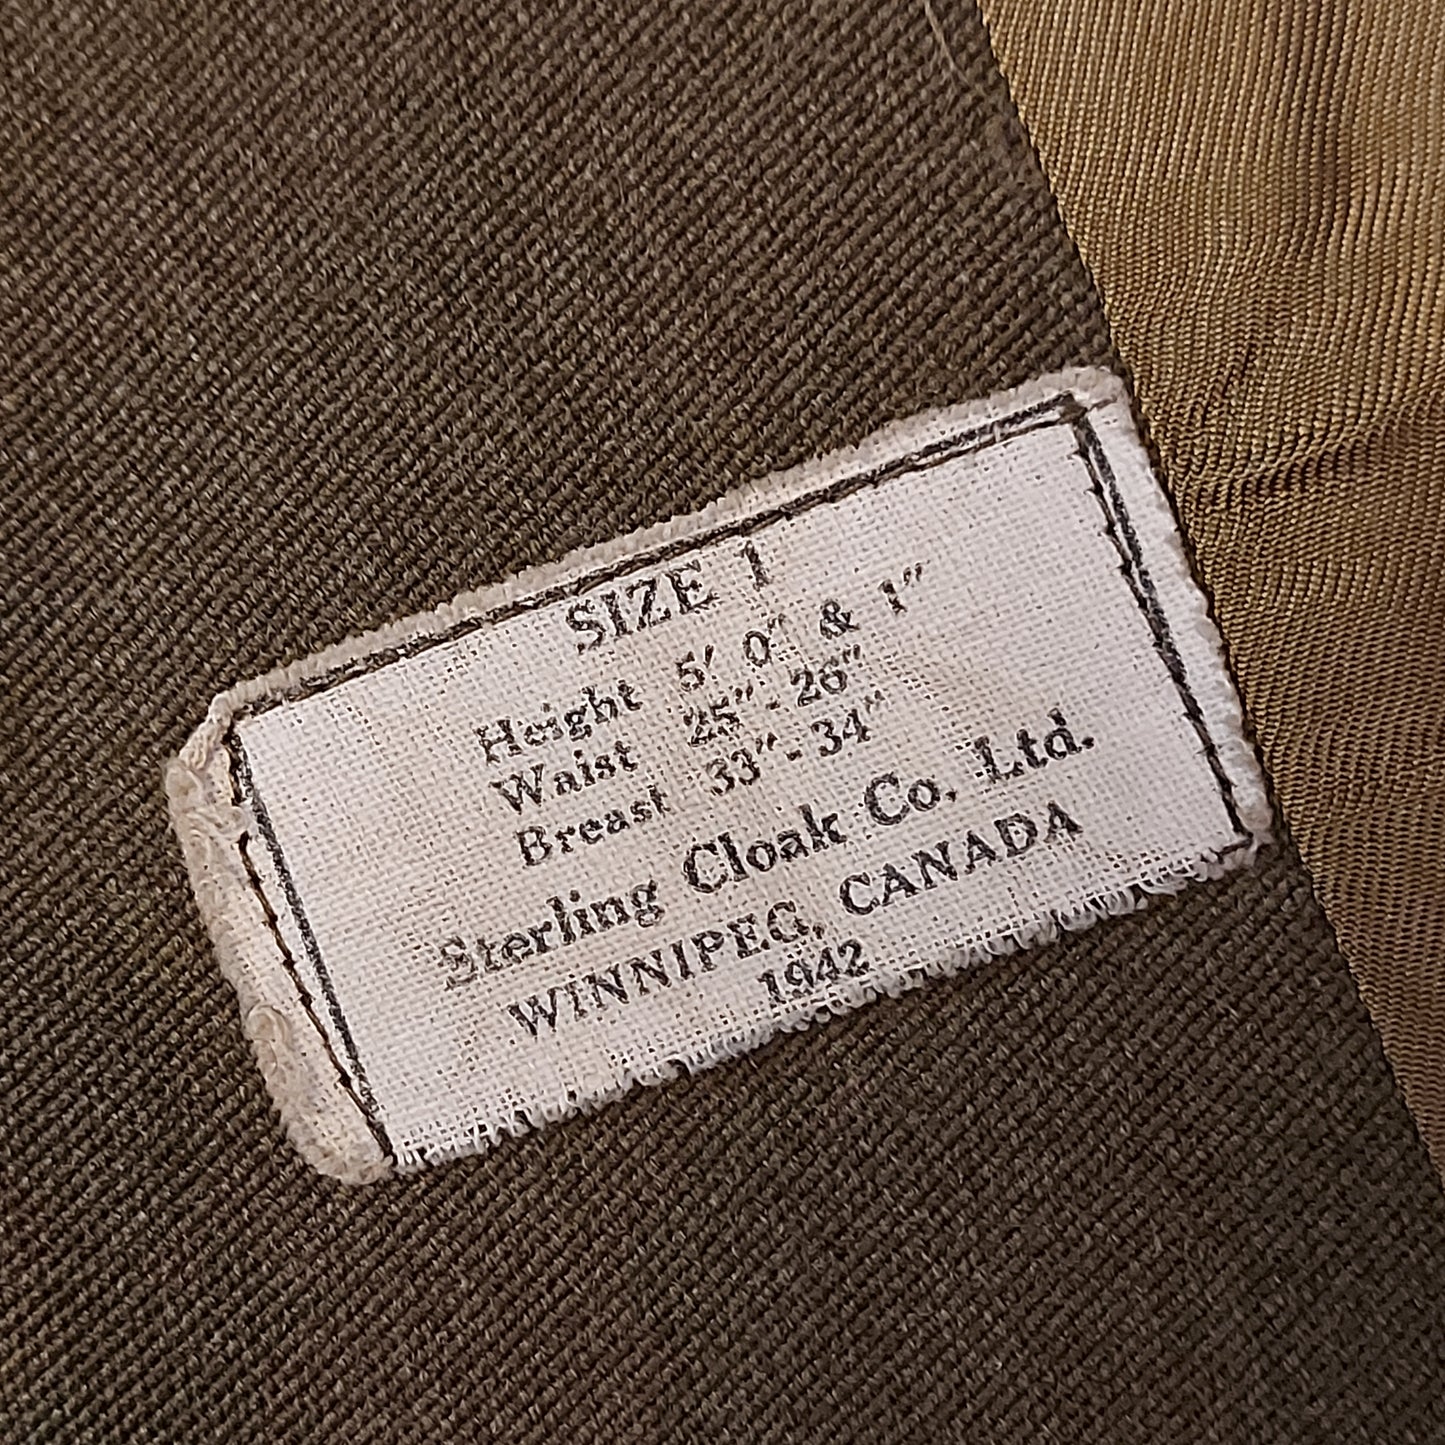 Named WW2 CWAC Canadian Women's Army Corps Tunic